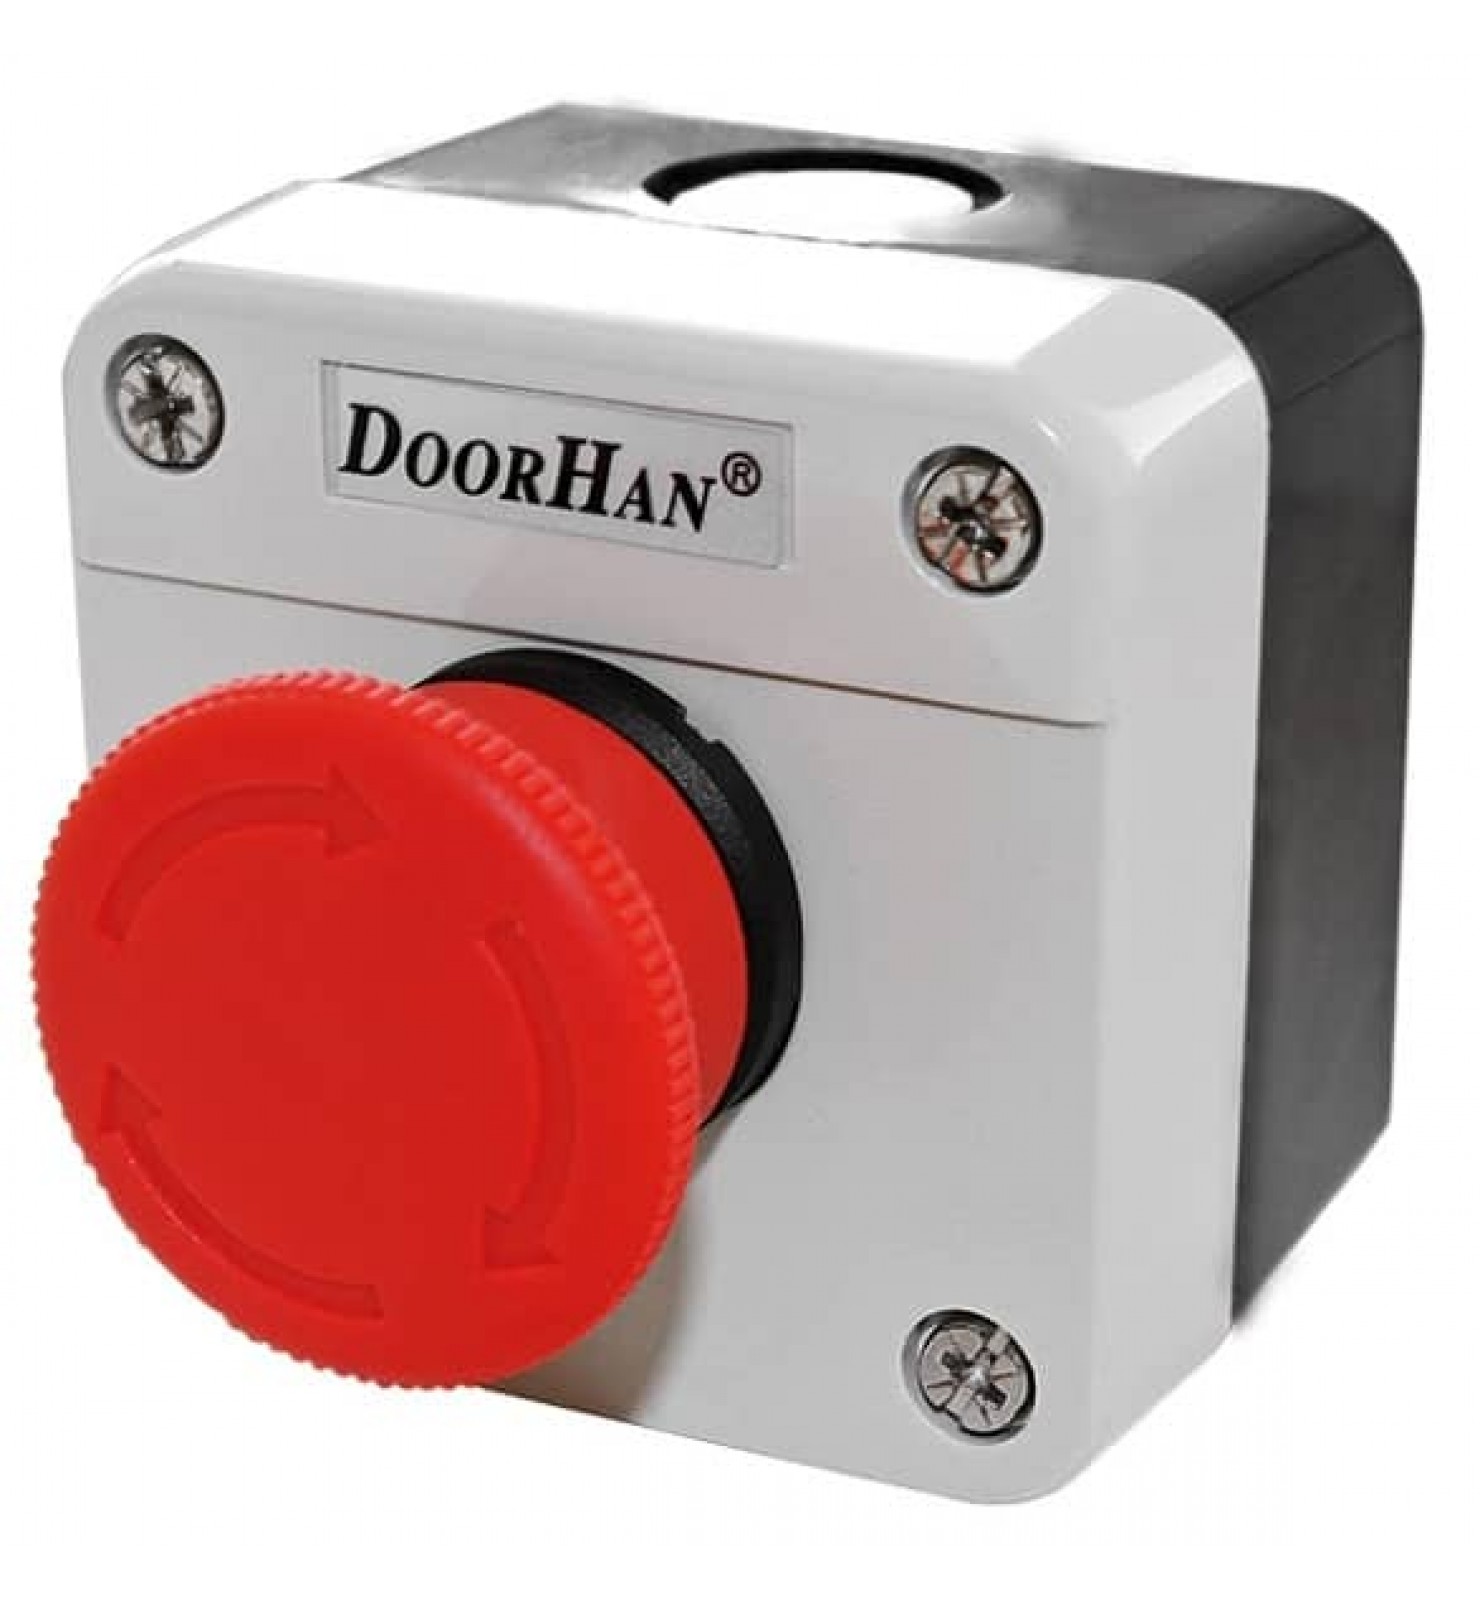 DoorHan STOP кнопка для аварийной остановки привода